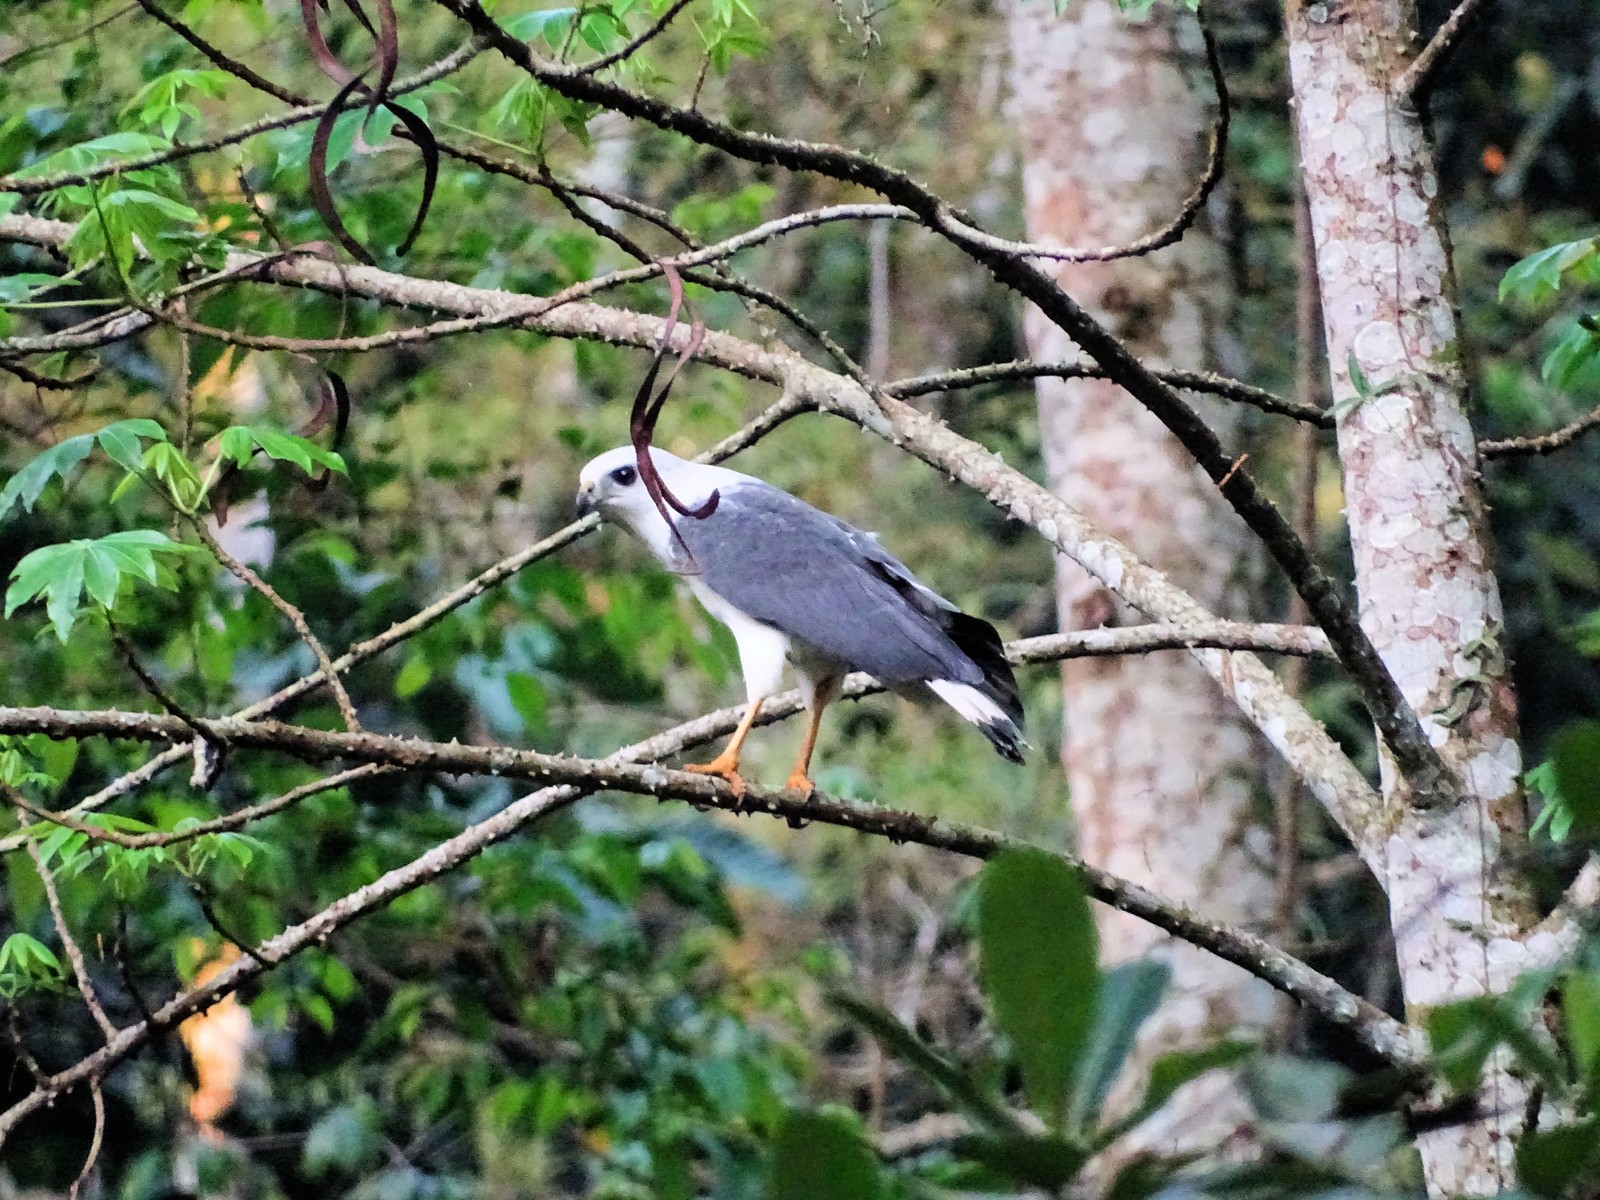 O gavião pombo pequeno (Amadonastur lacernulatus) — Foto: Odirlei Fonseca